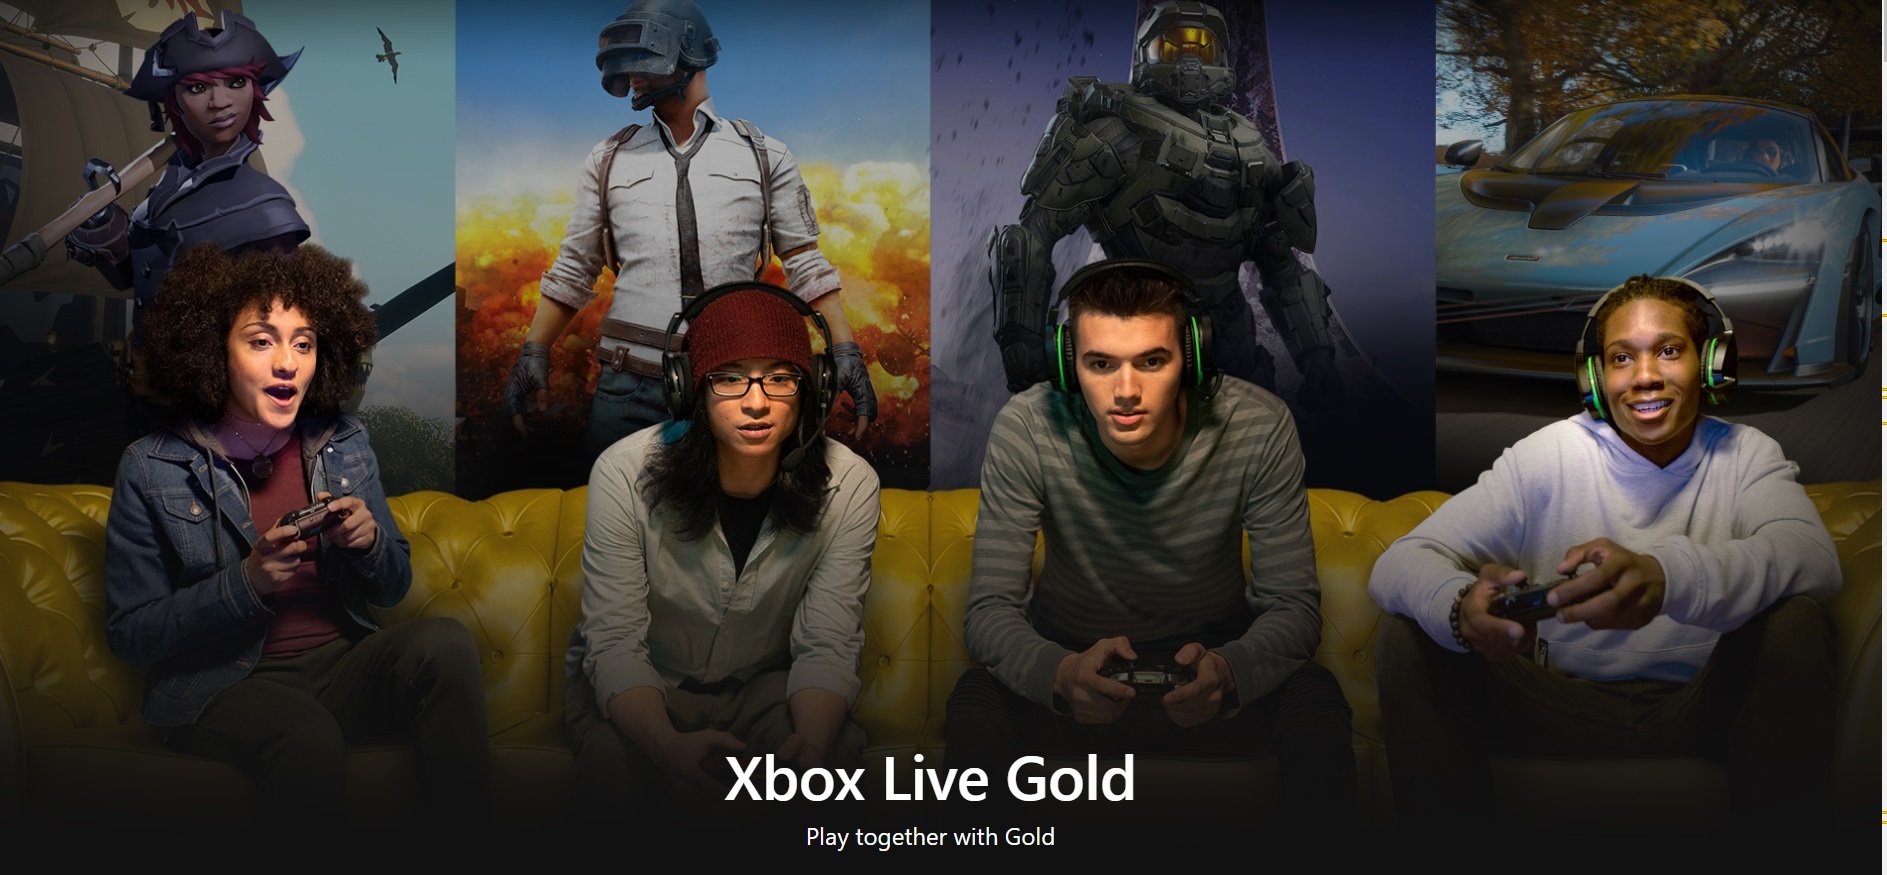 best price xbox live gold 12 month uk